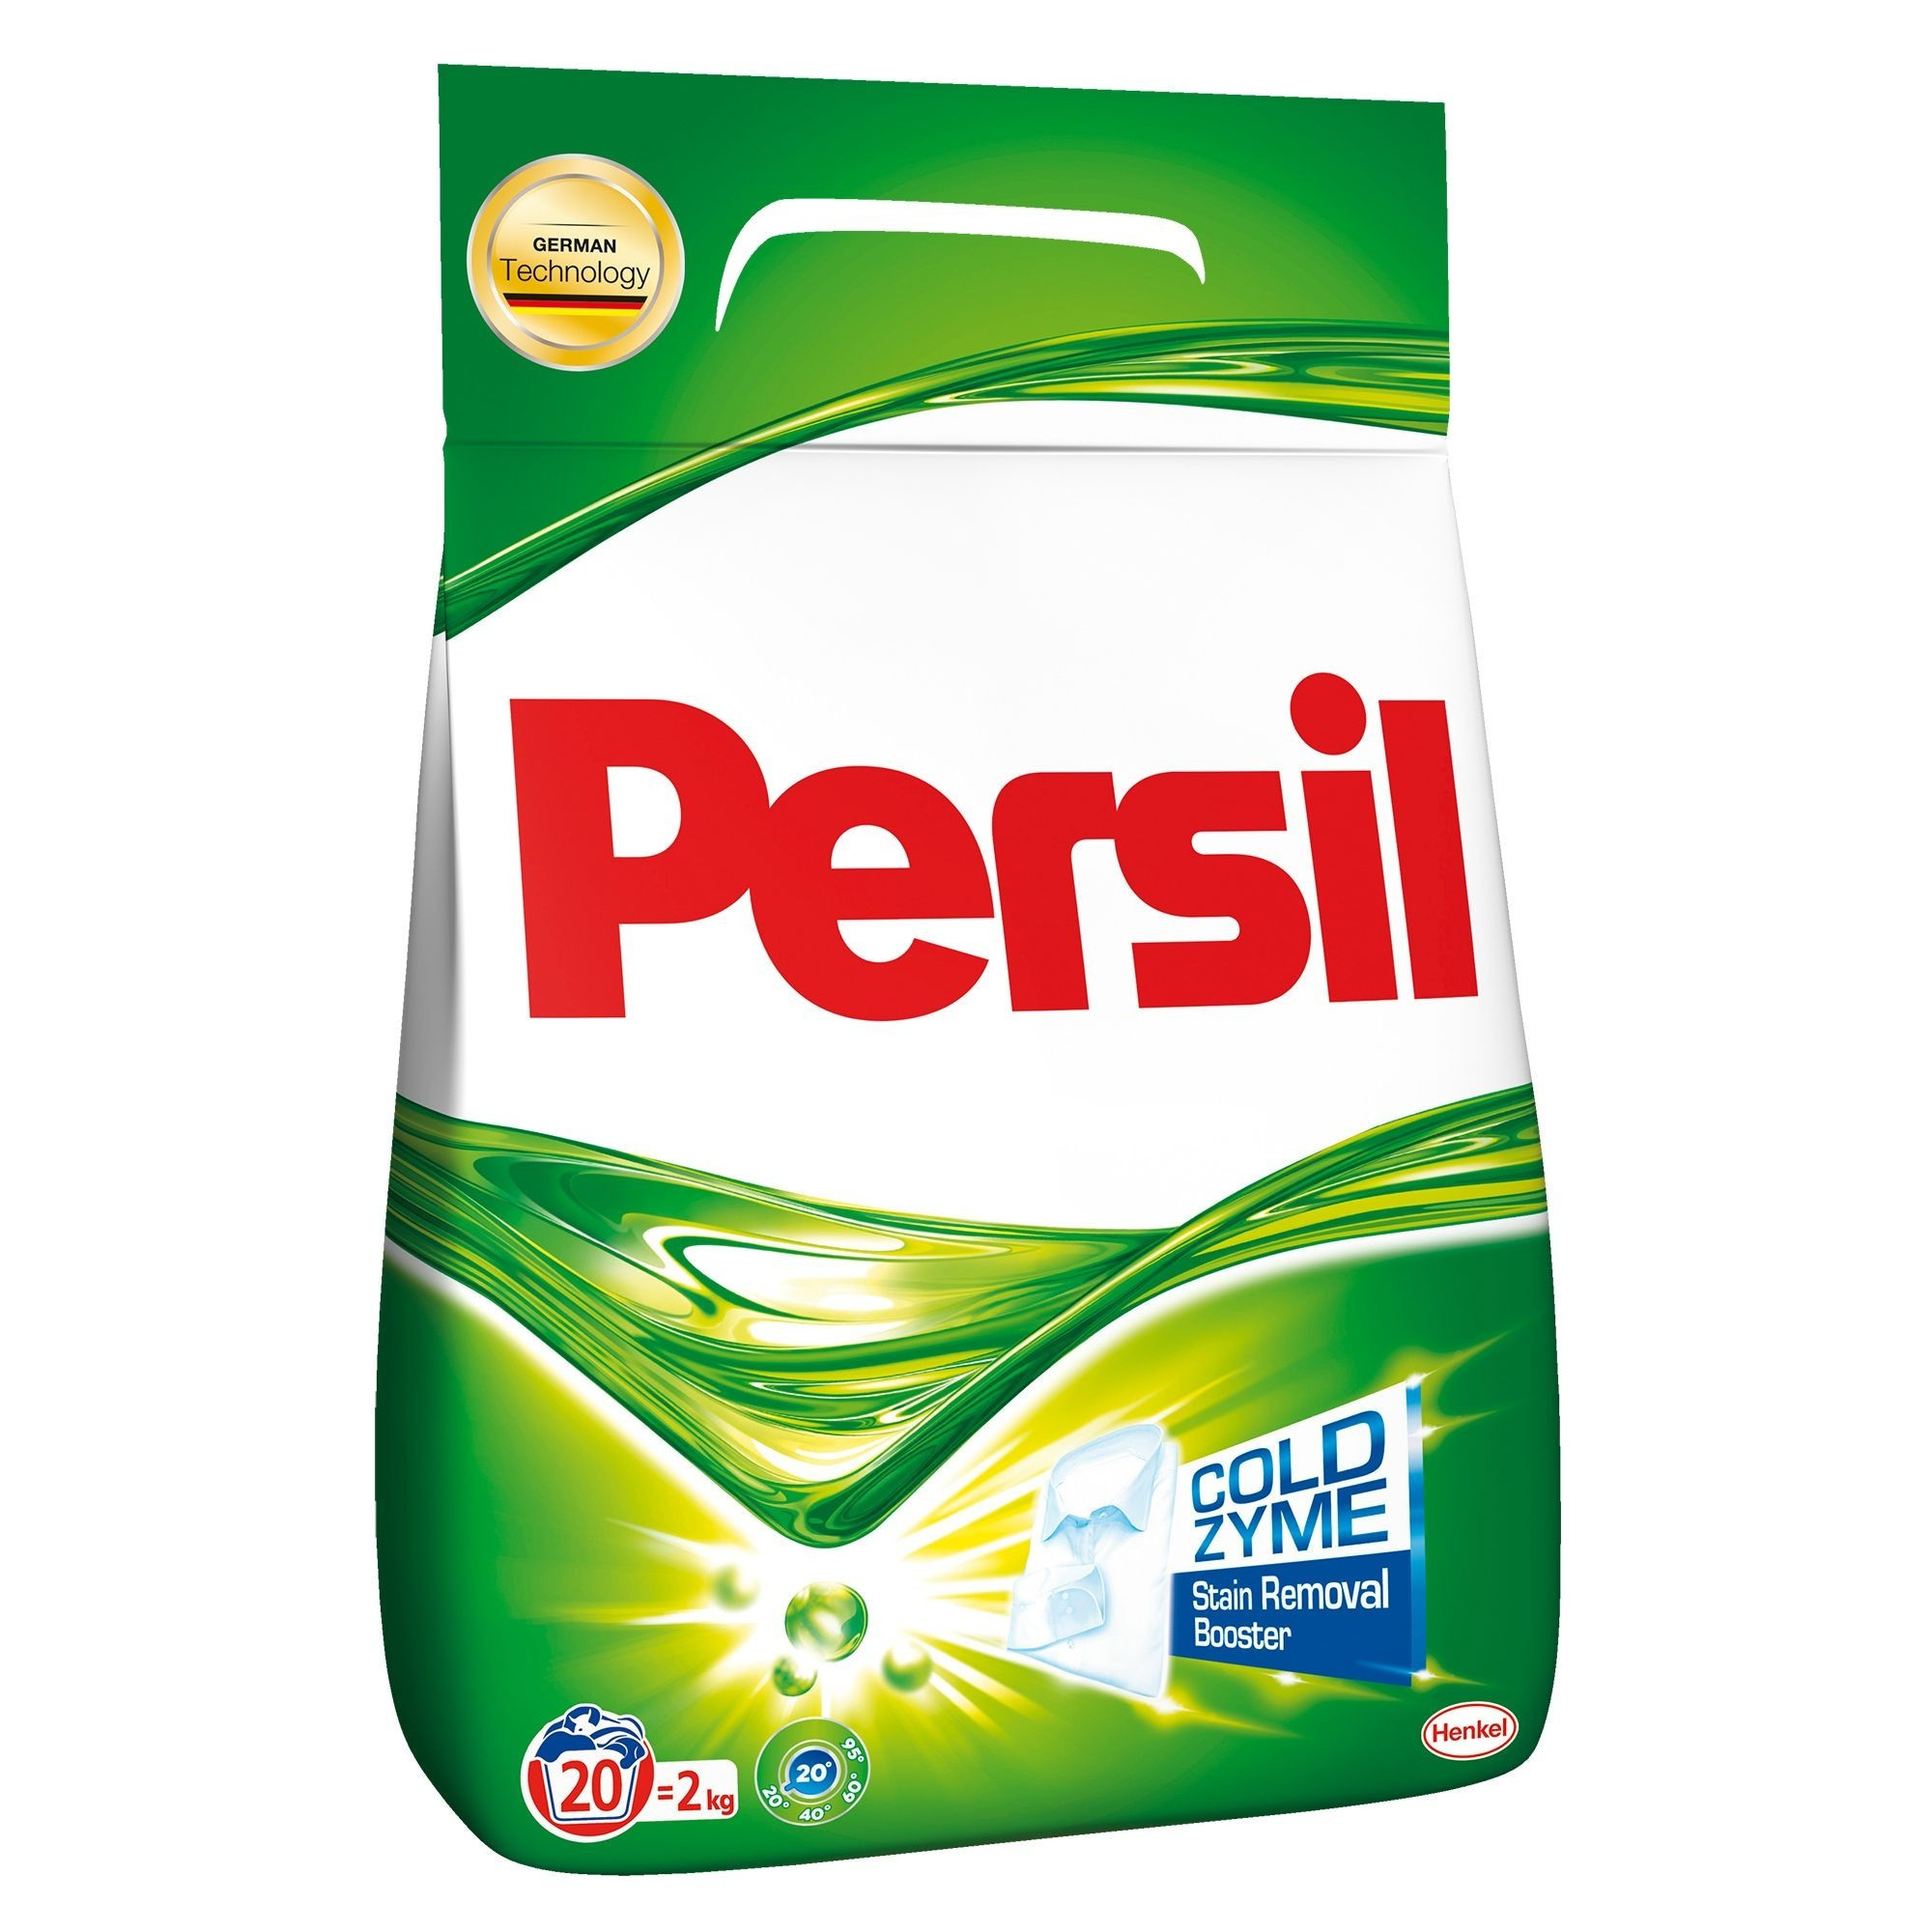 Detergent pudra Persil Regular, 2 kg